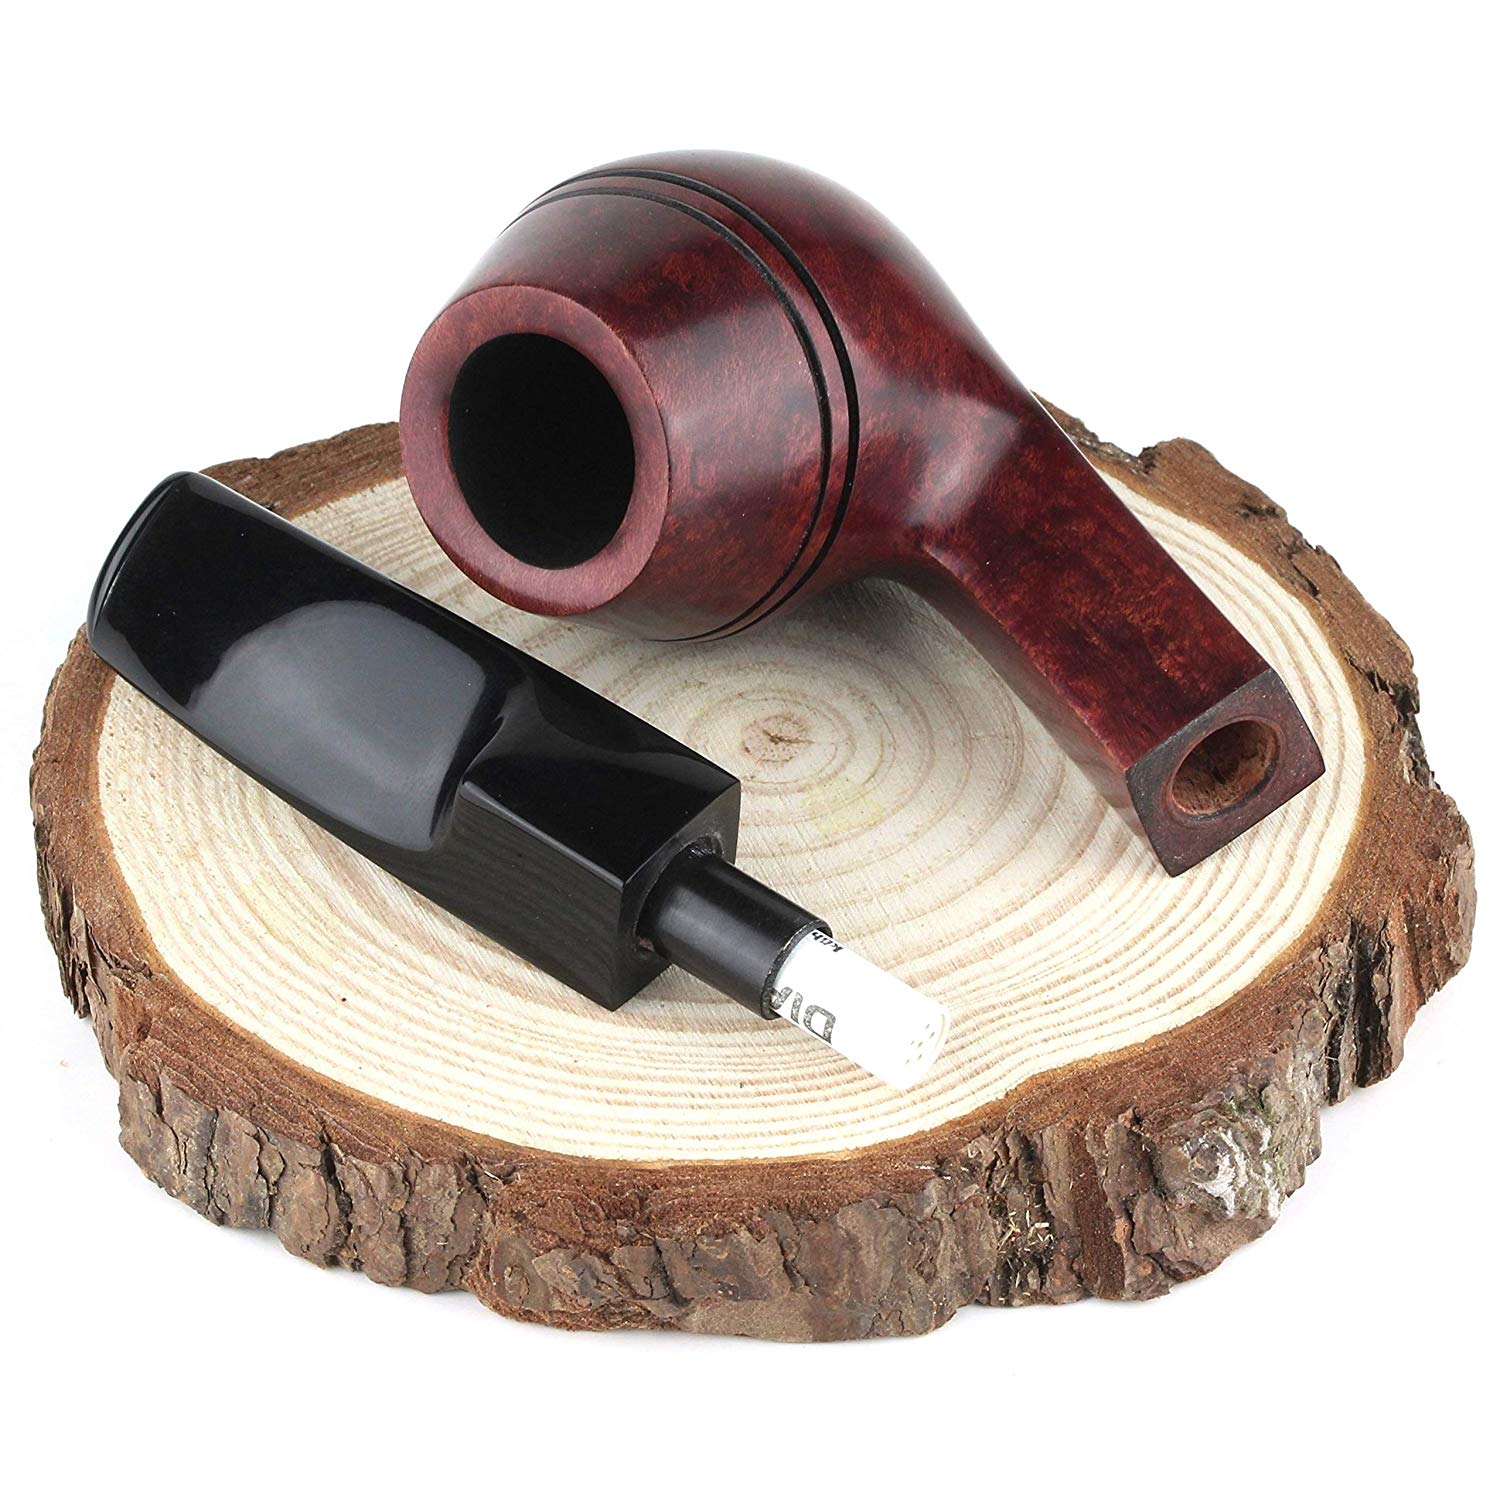 No. 170 Prestige Mediterranean Briar Wood Tobacco Pipe